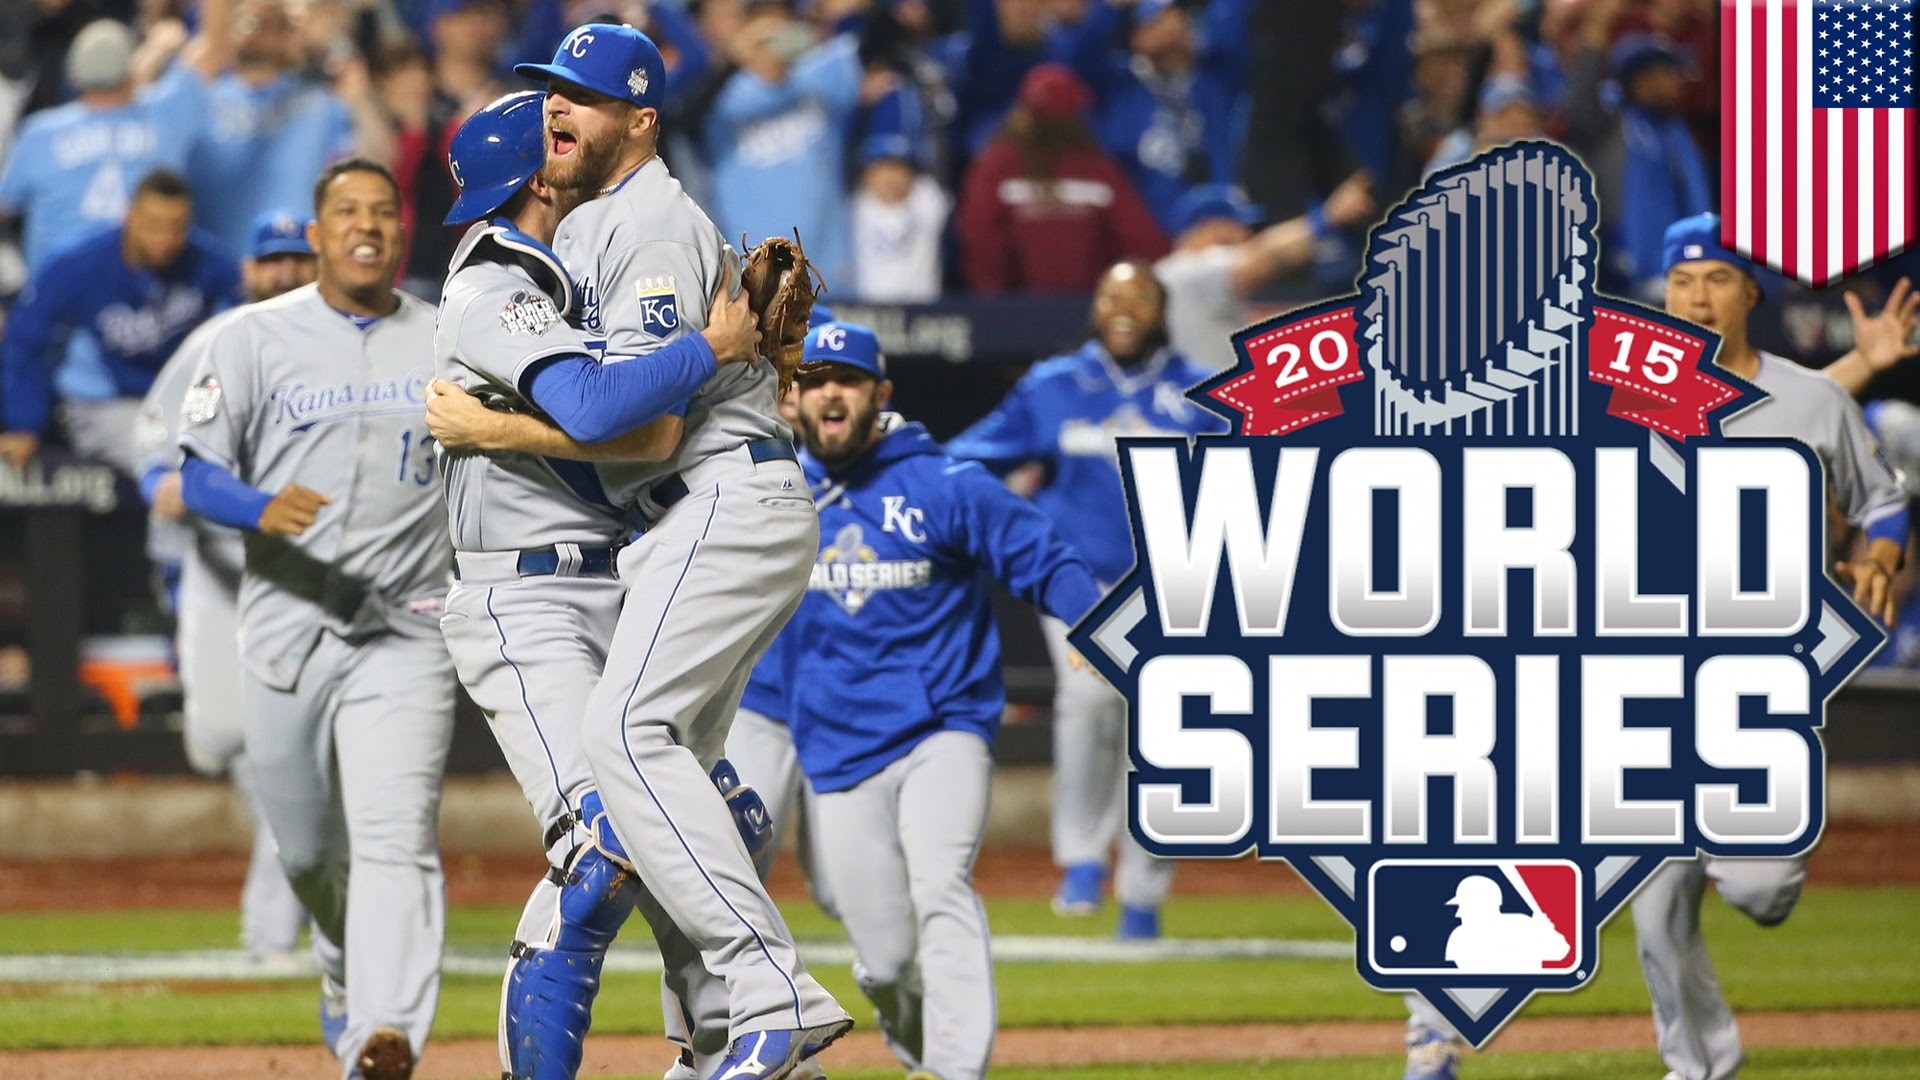 1920x1080 Kansas City Royals win World Series 2015: Royals crush New York Mets 7-2 in  Game 5 - YouTube